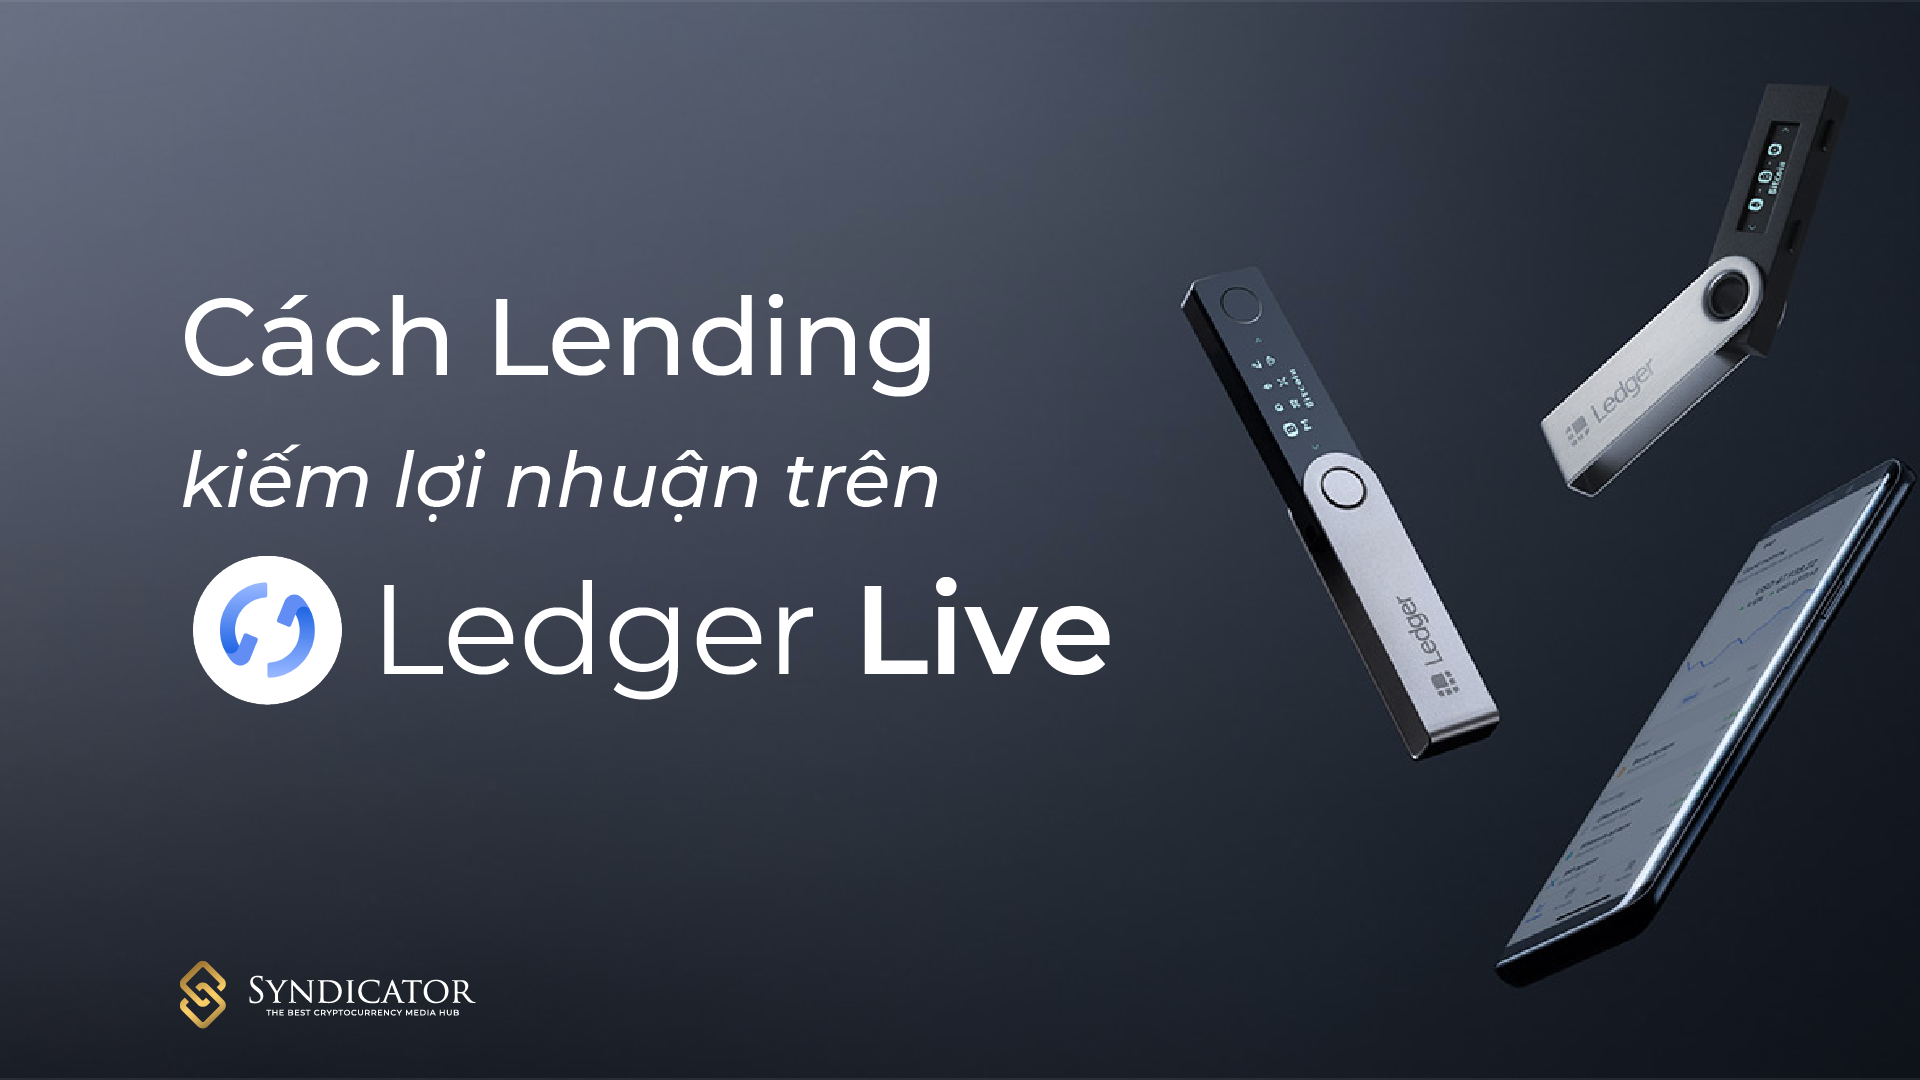 Cách Lending kiếm lợi nhuận trên Ledger Live - Syndicator